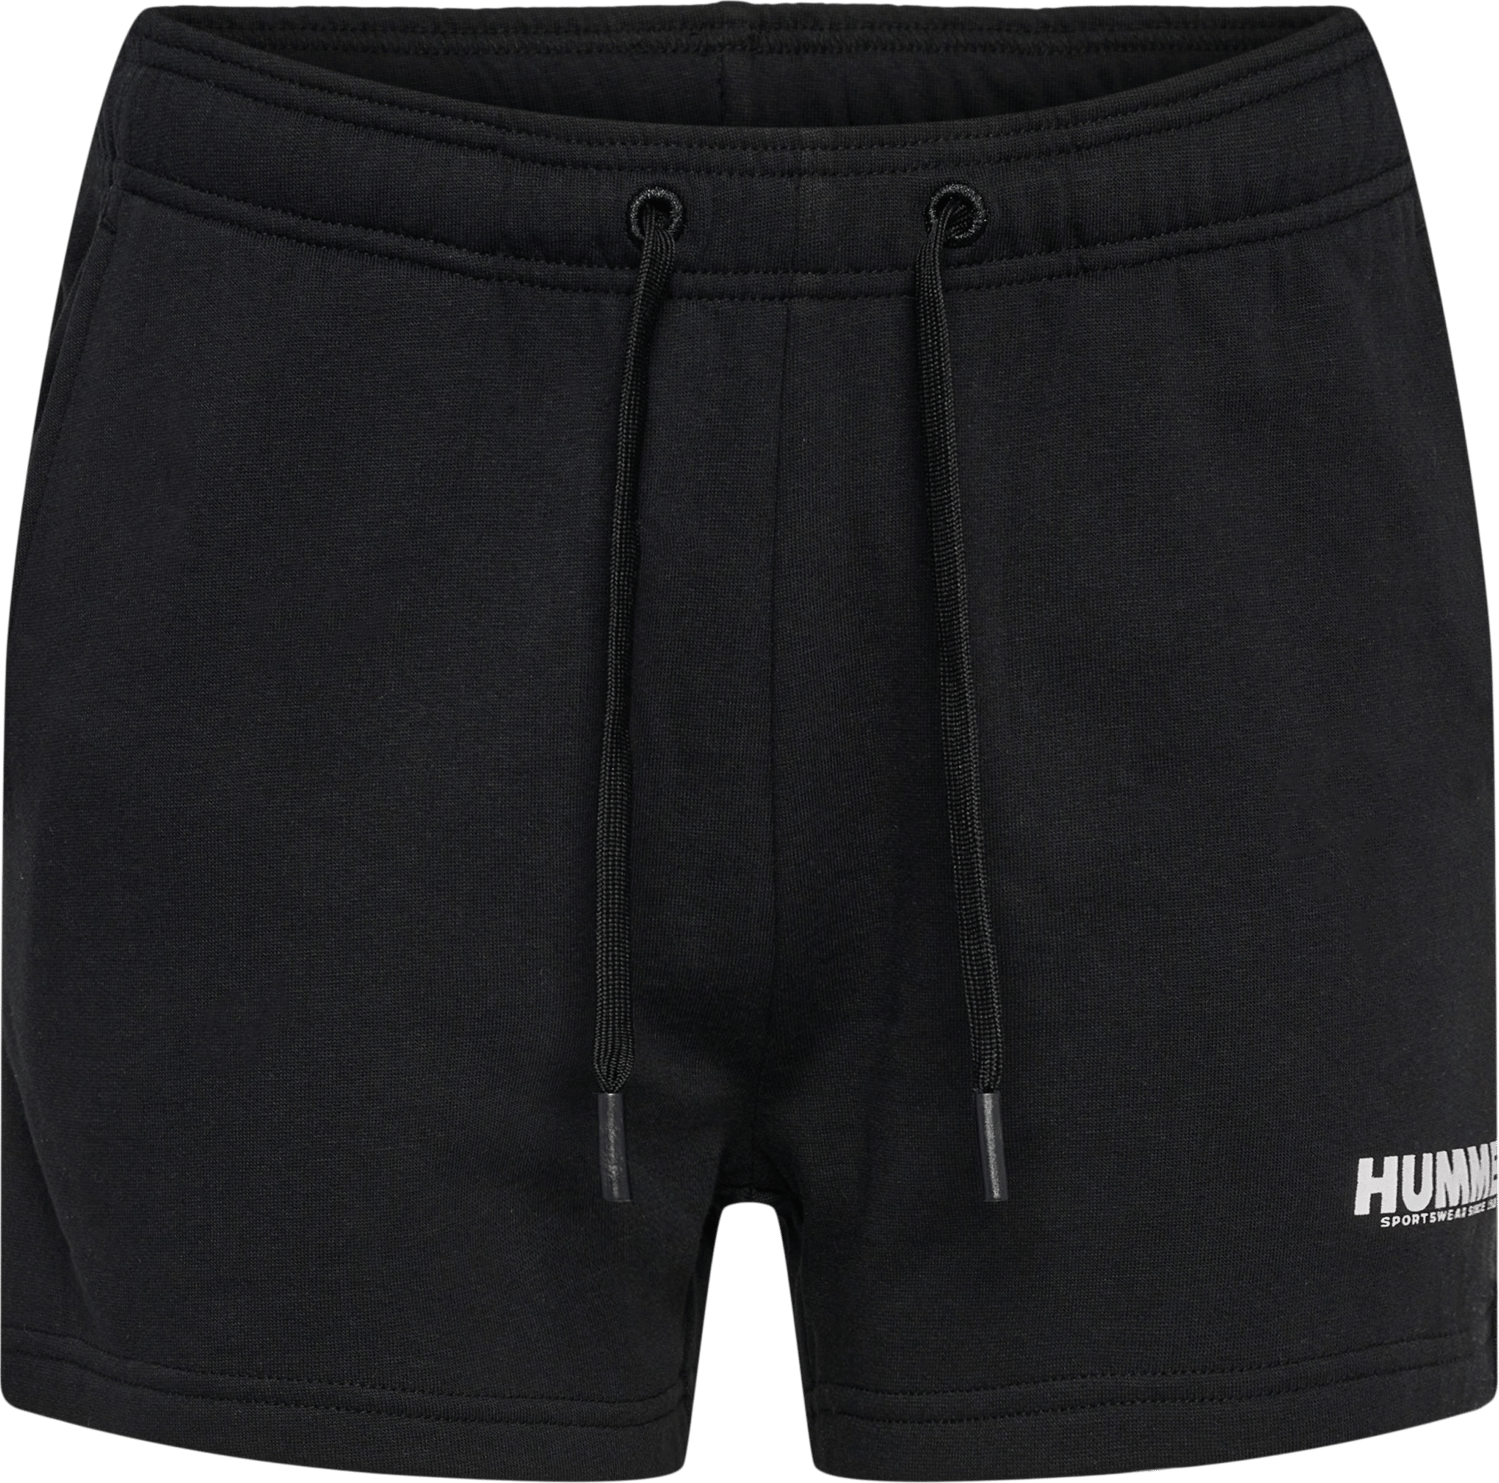 Hummel Women's hmlLEGACY Shorts Black